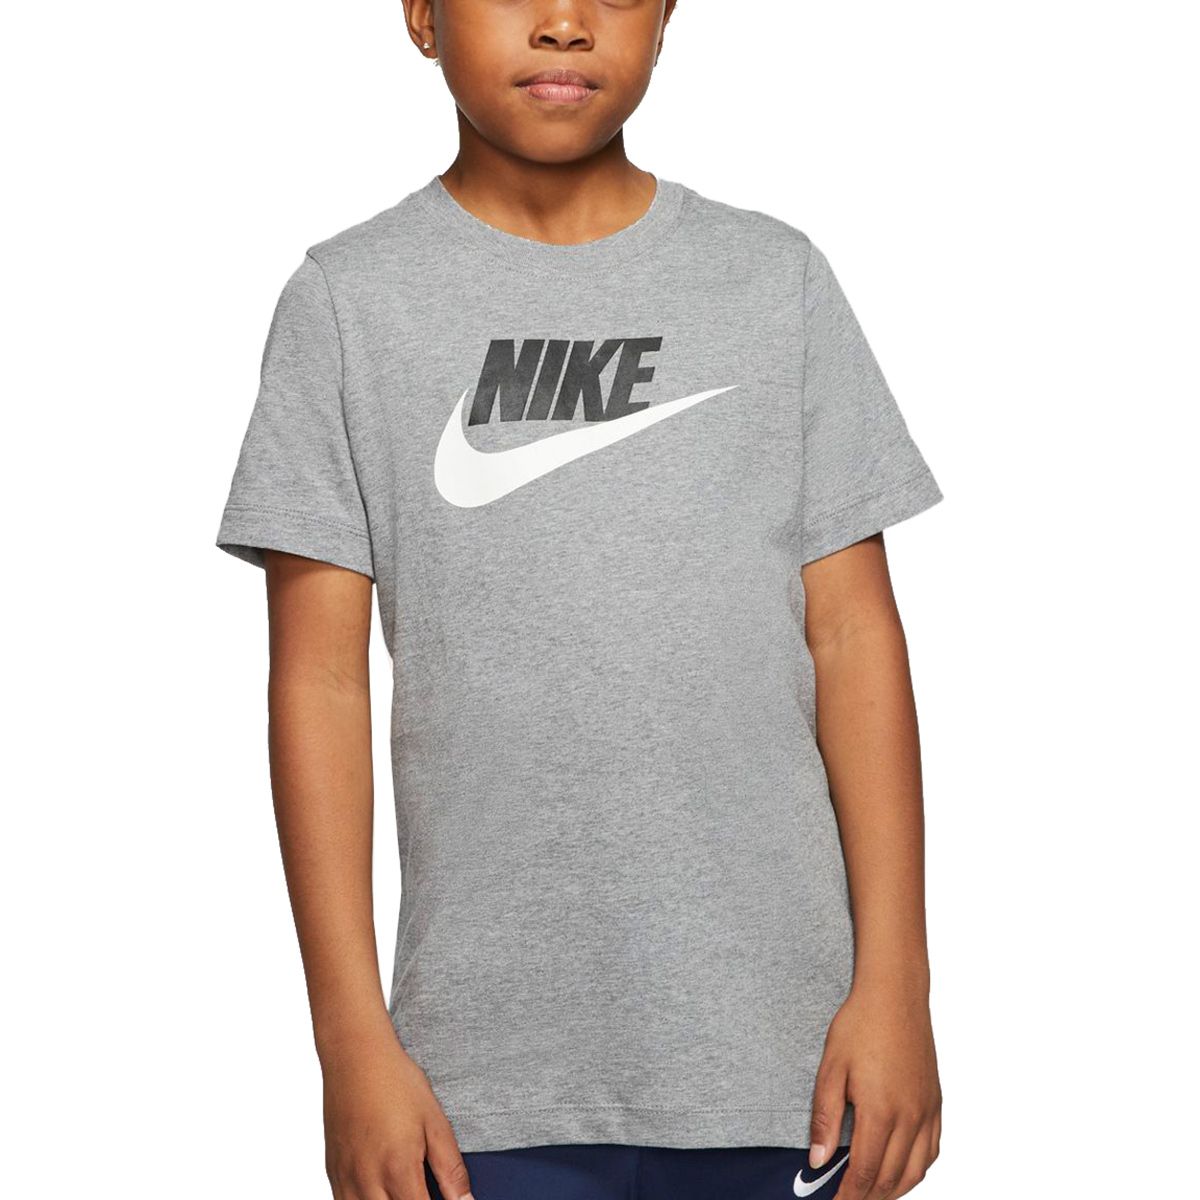 Nike Sportswear Boys' Cotton T-Shirt